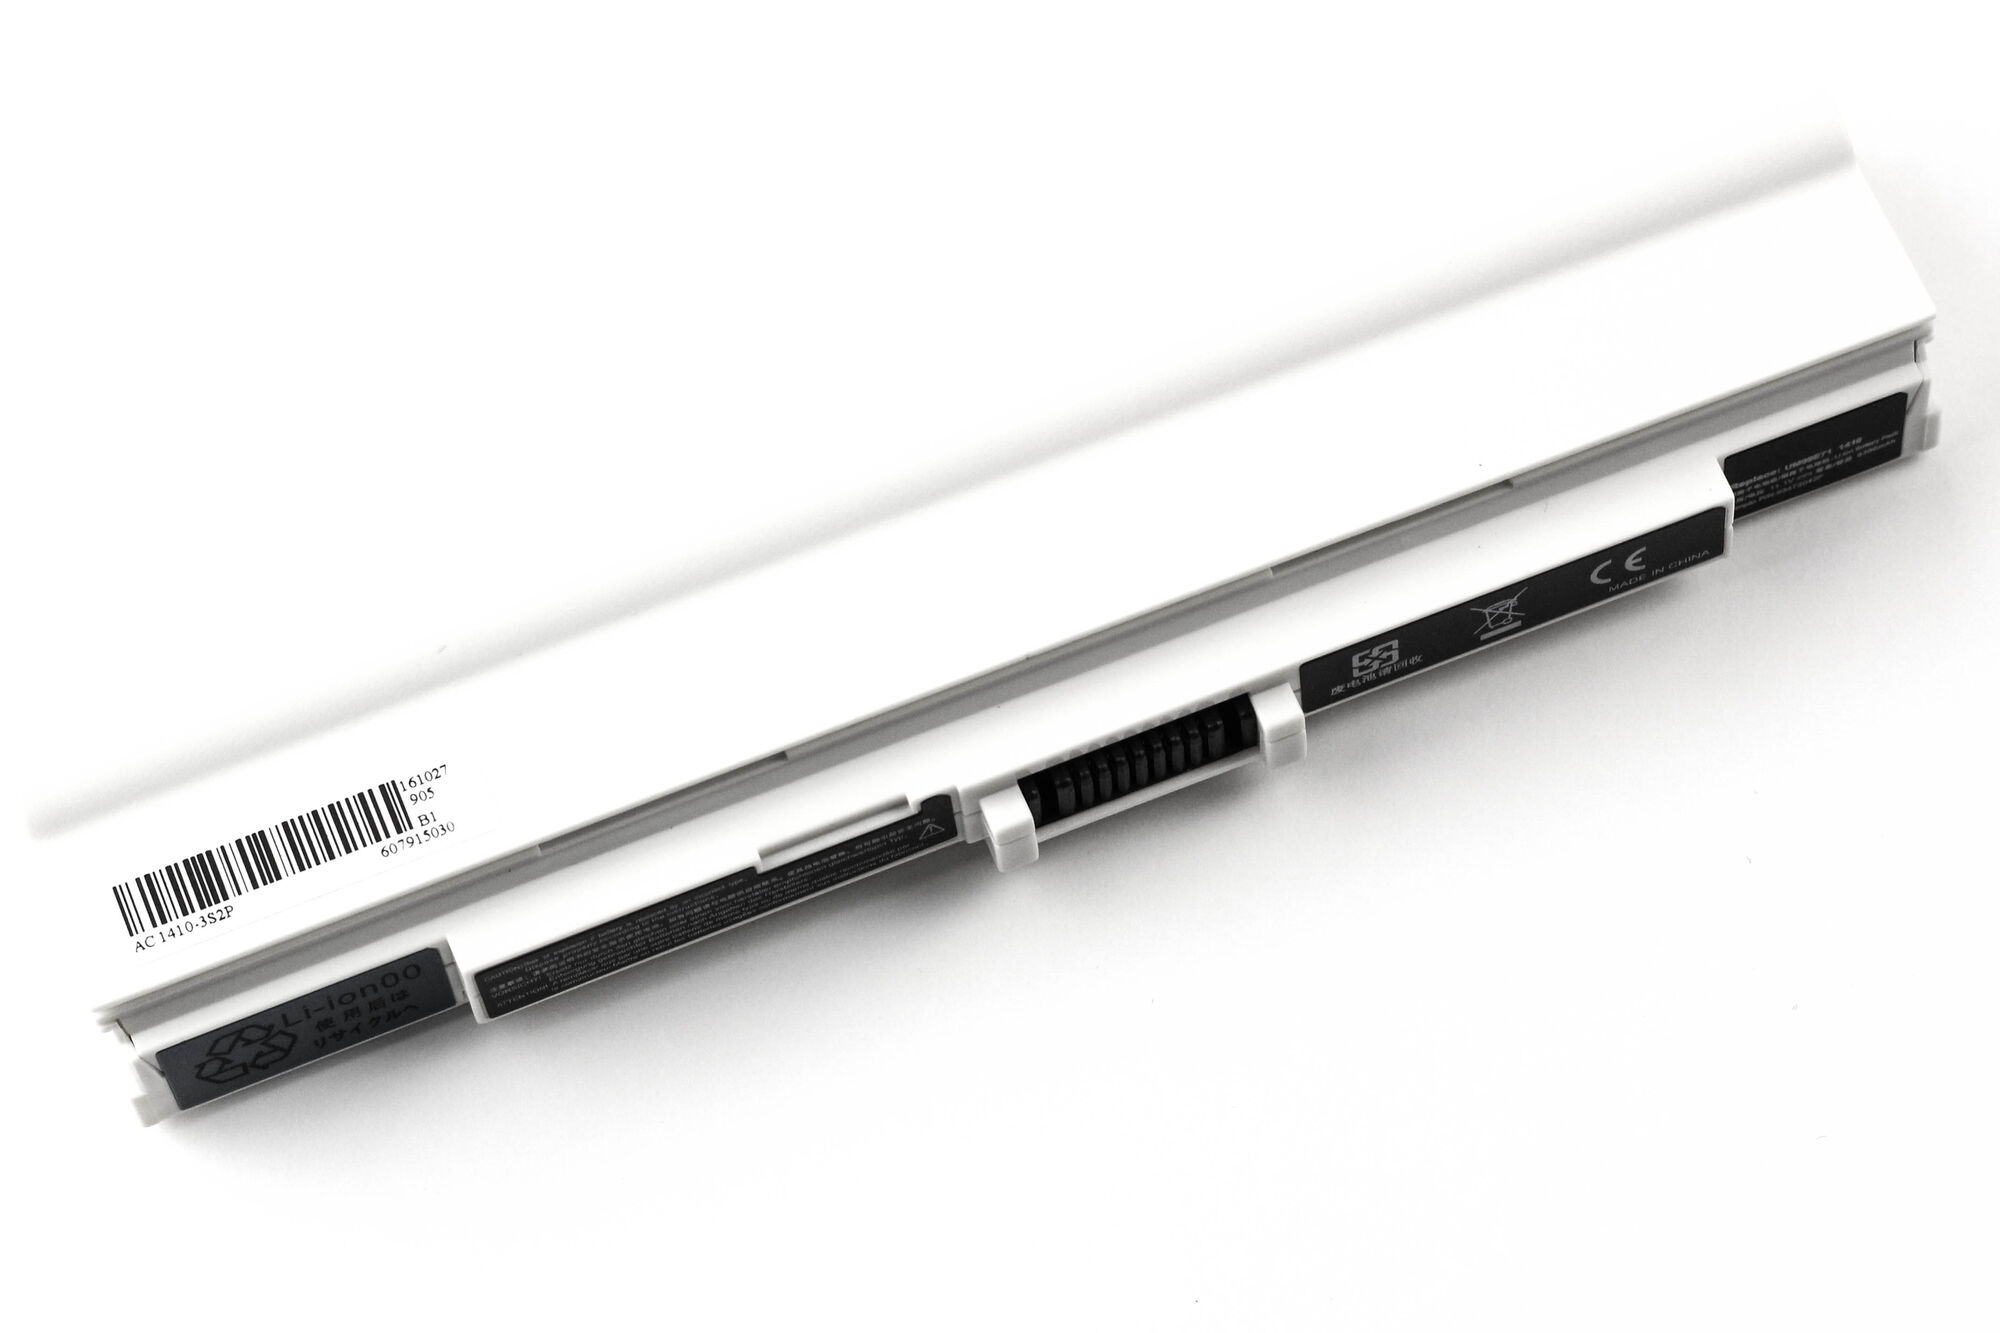 Аккумулятор для Acer 1810 1410 белый (11.1V 4400mAh) p/n: UM09E31 UM09E32 UM09E36 UM09E51 UM09E56